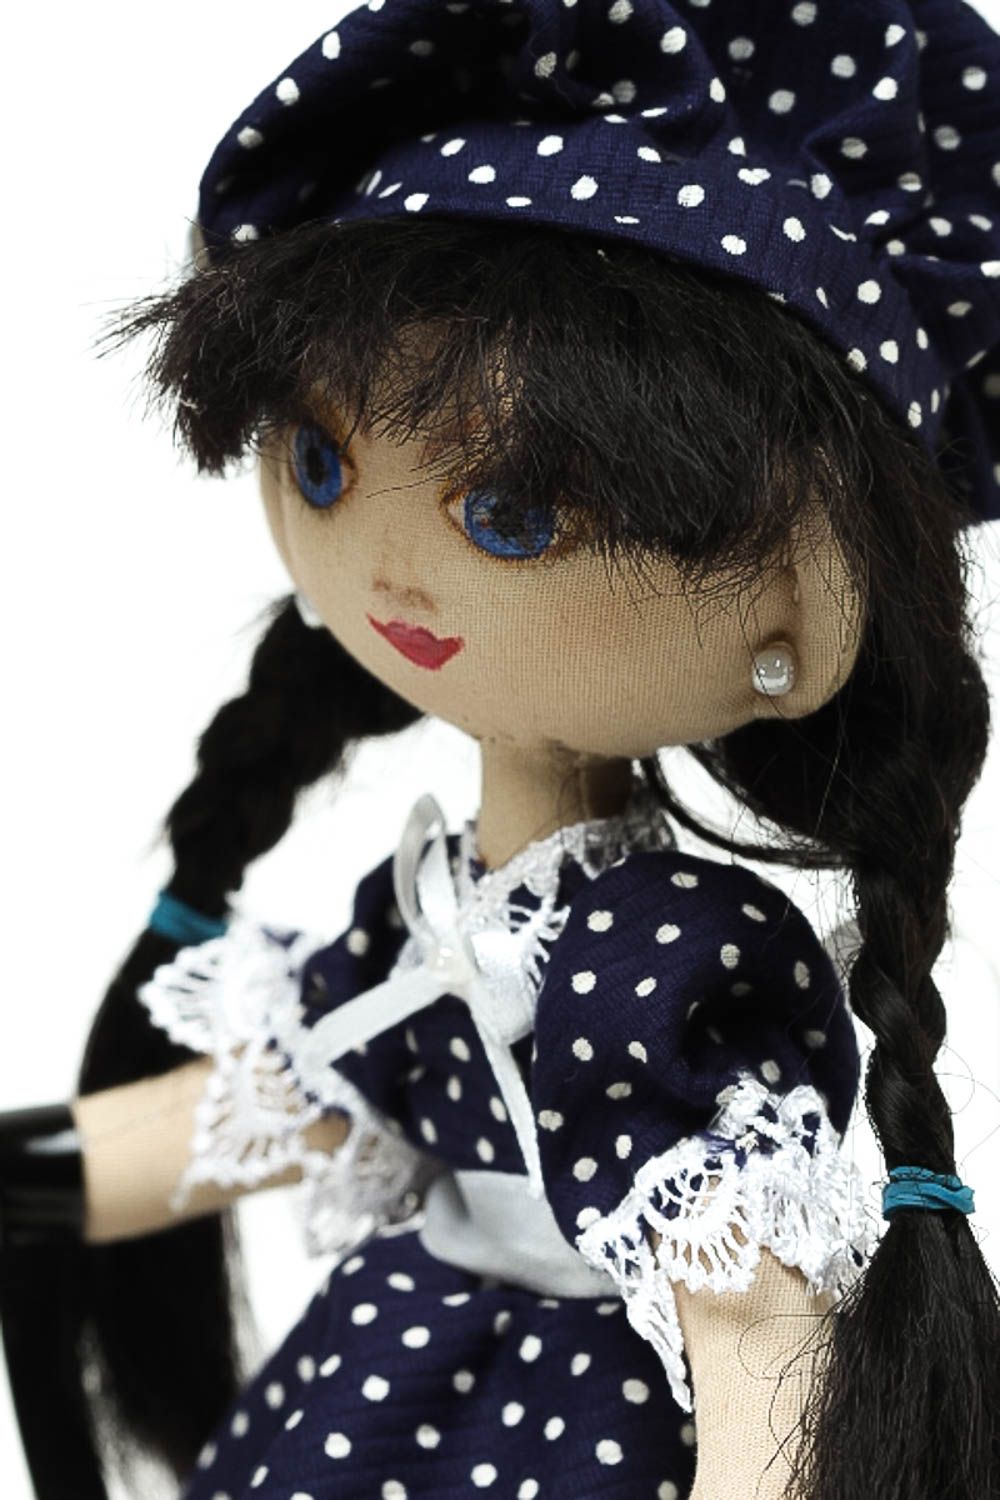 Handmade doll designer doll interior doll soft doll for children decor ideas photo 2